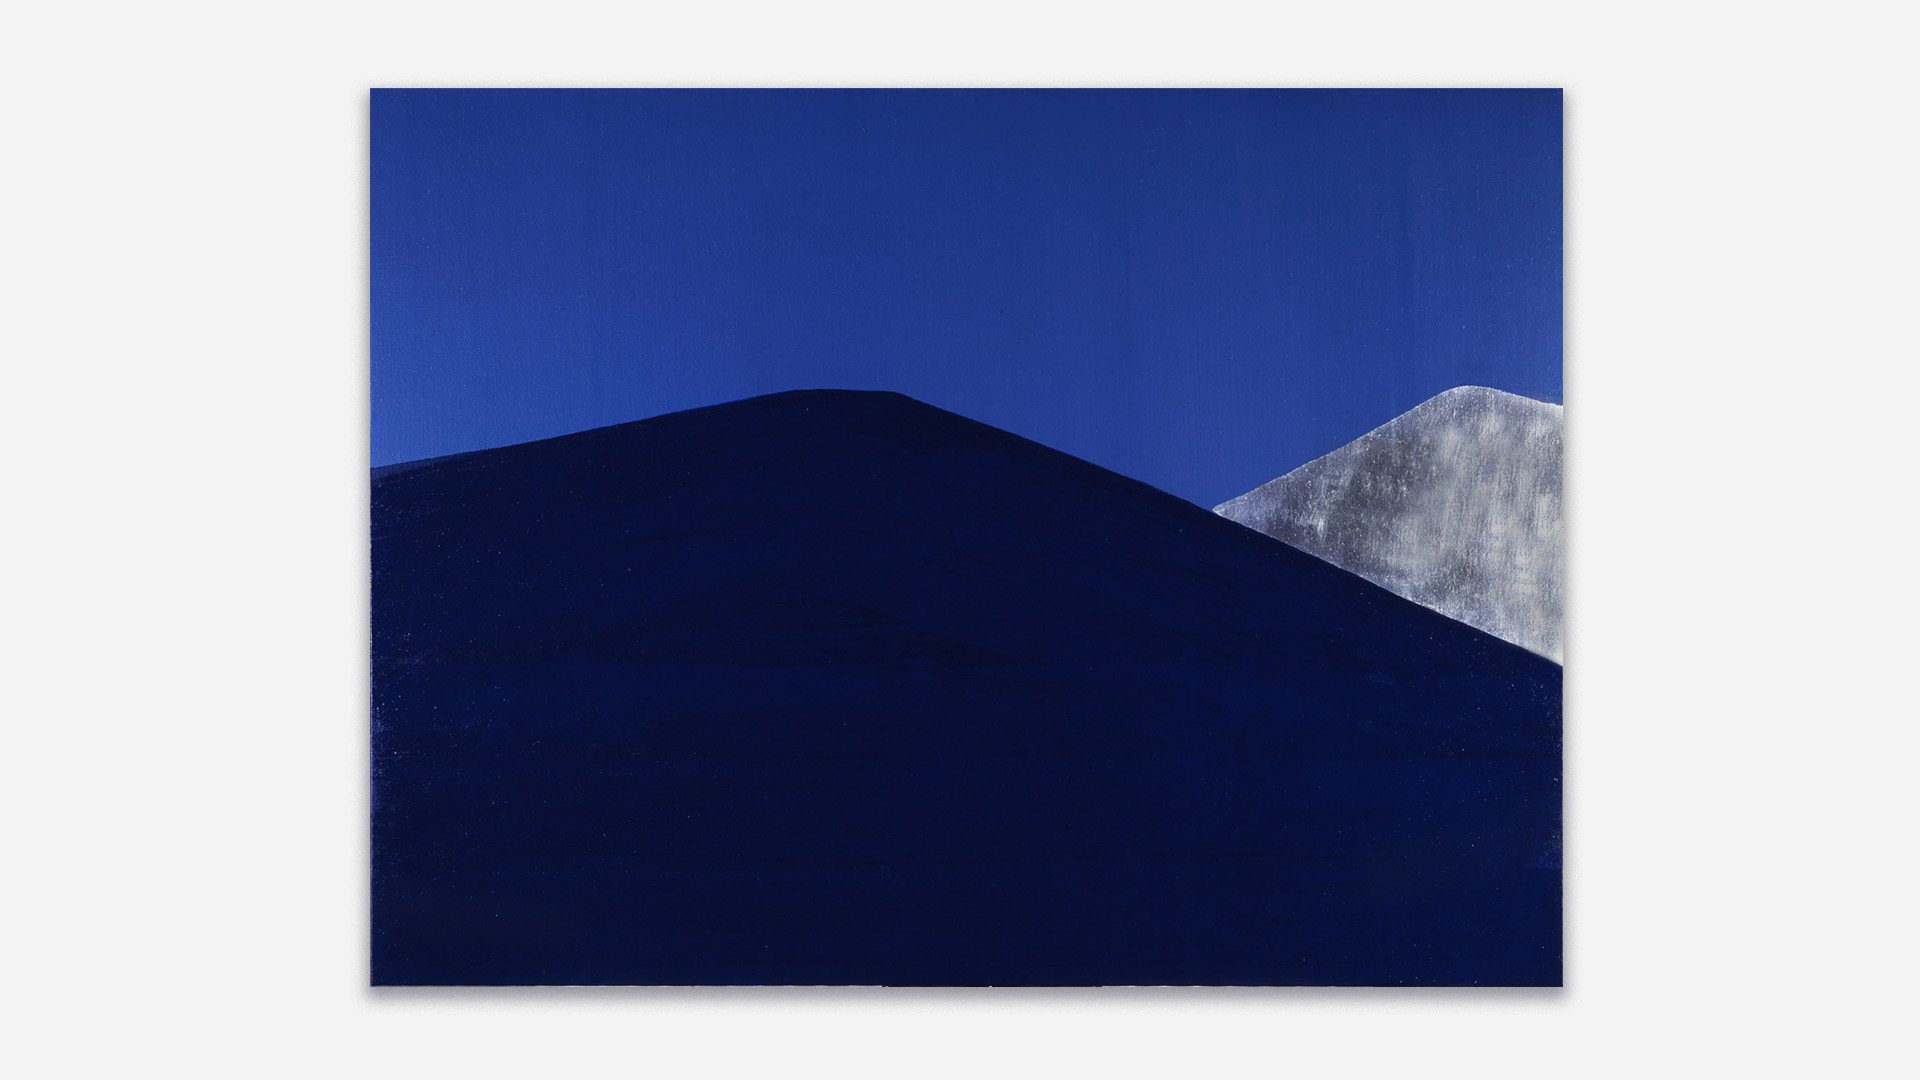 Anna-Eva Bergman, N°20-1981 Paysage de montagne, 1981, Acrylic and metal leaf on canvas, 200 x 250 cm